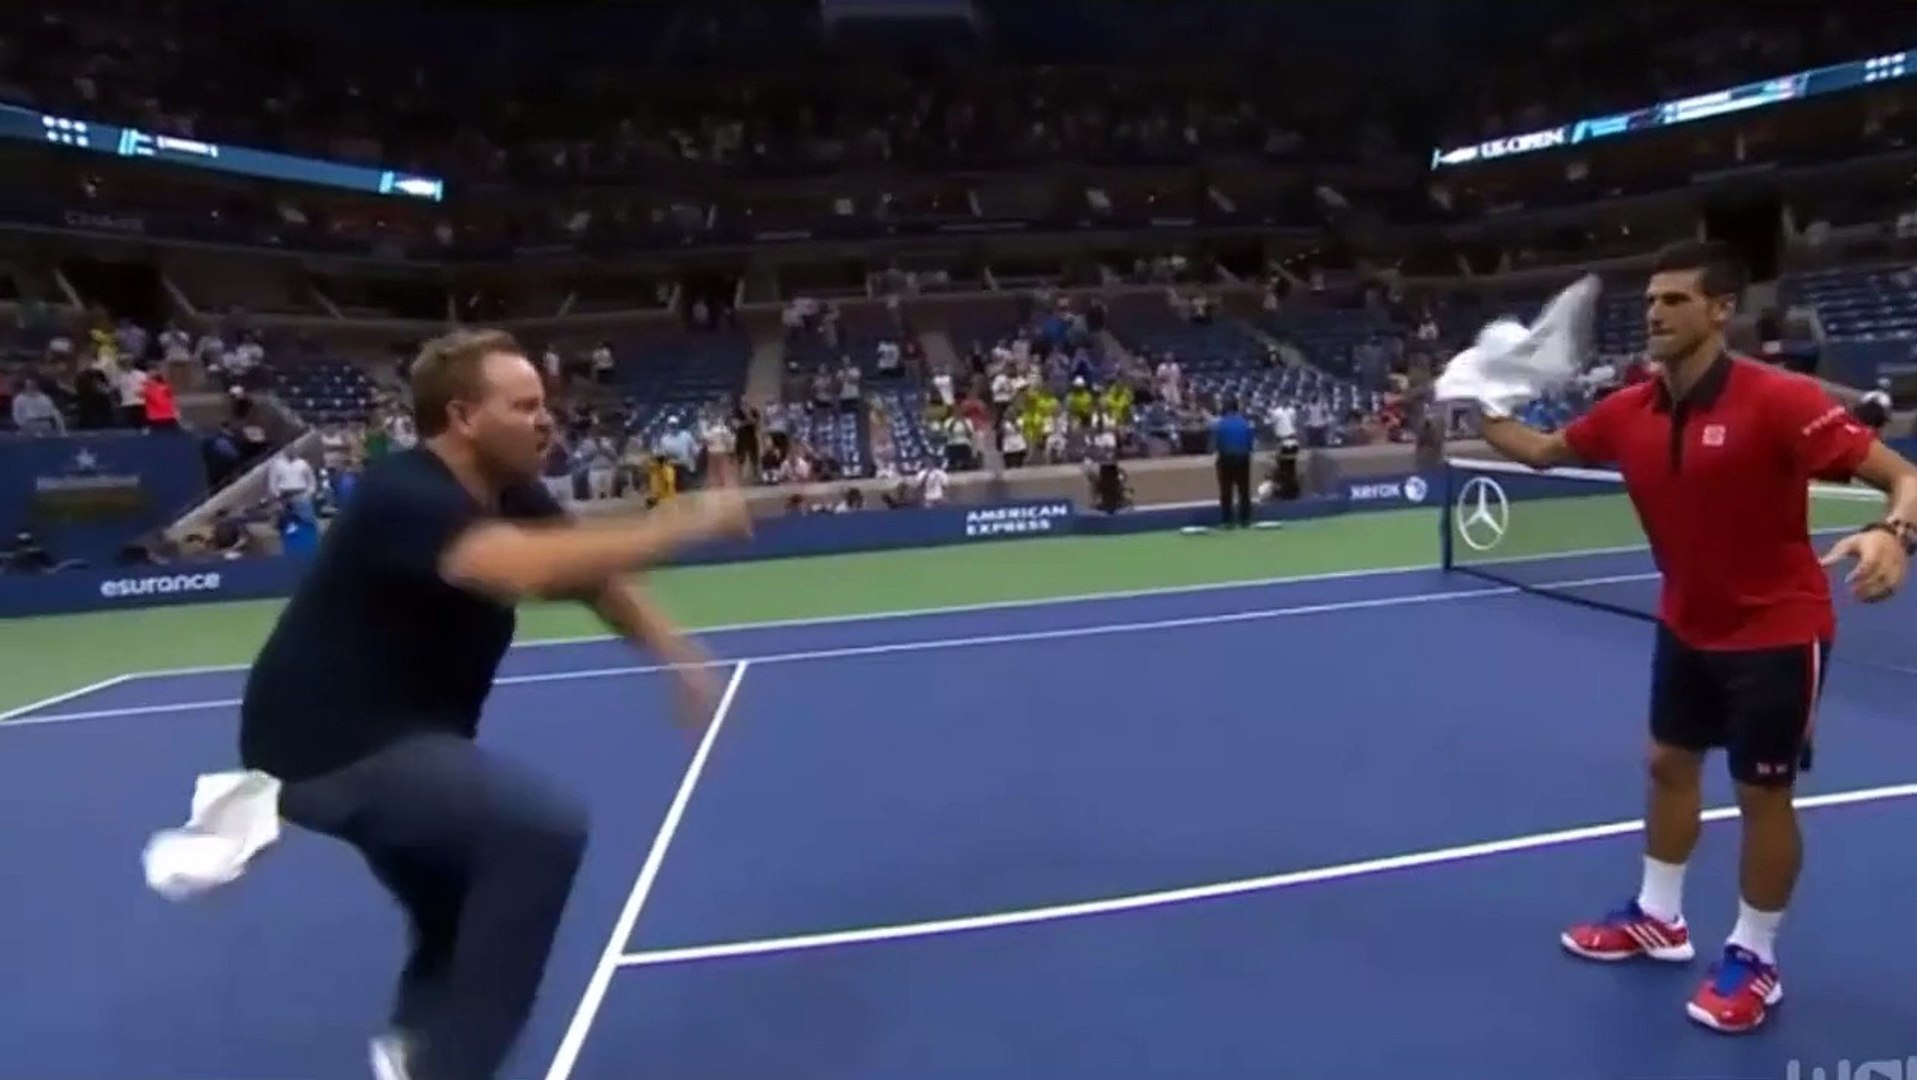 La danse de la serviette de Novak Djokovic à l'US Open - Vidéo Dailymotion